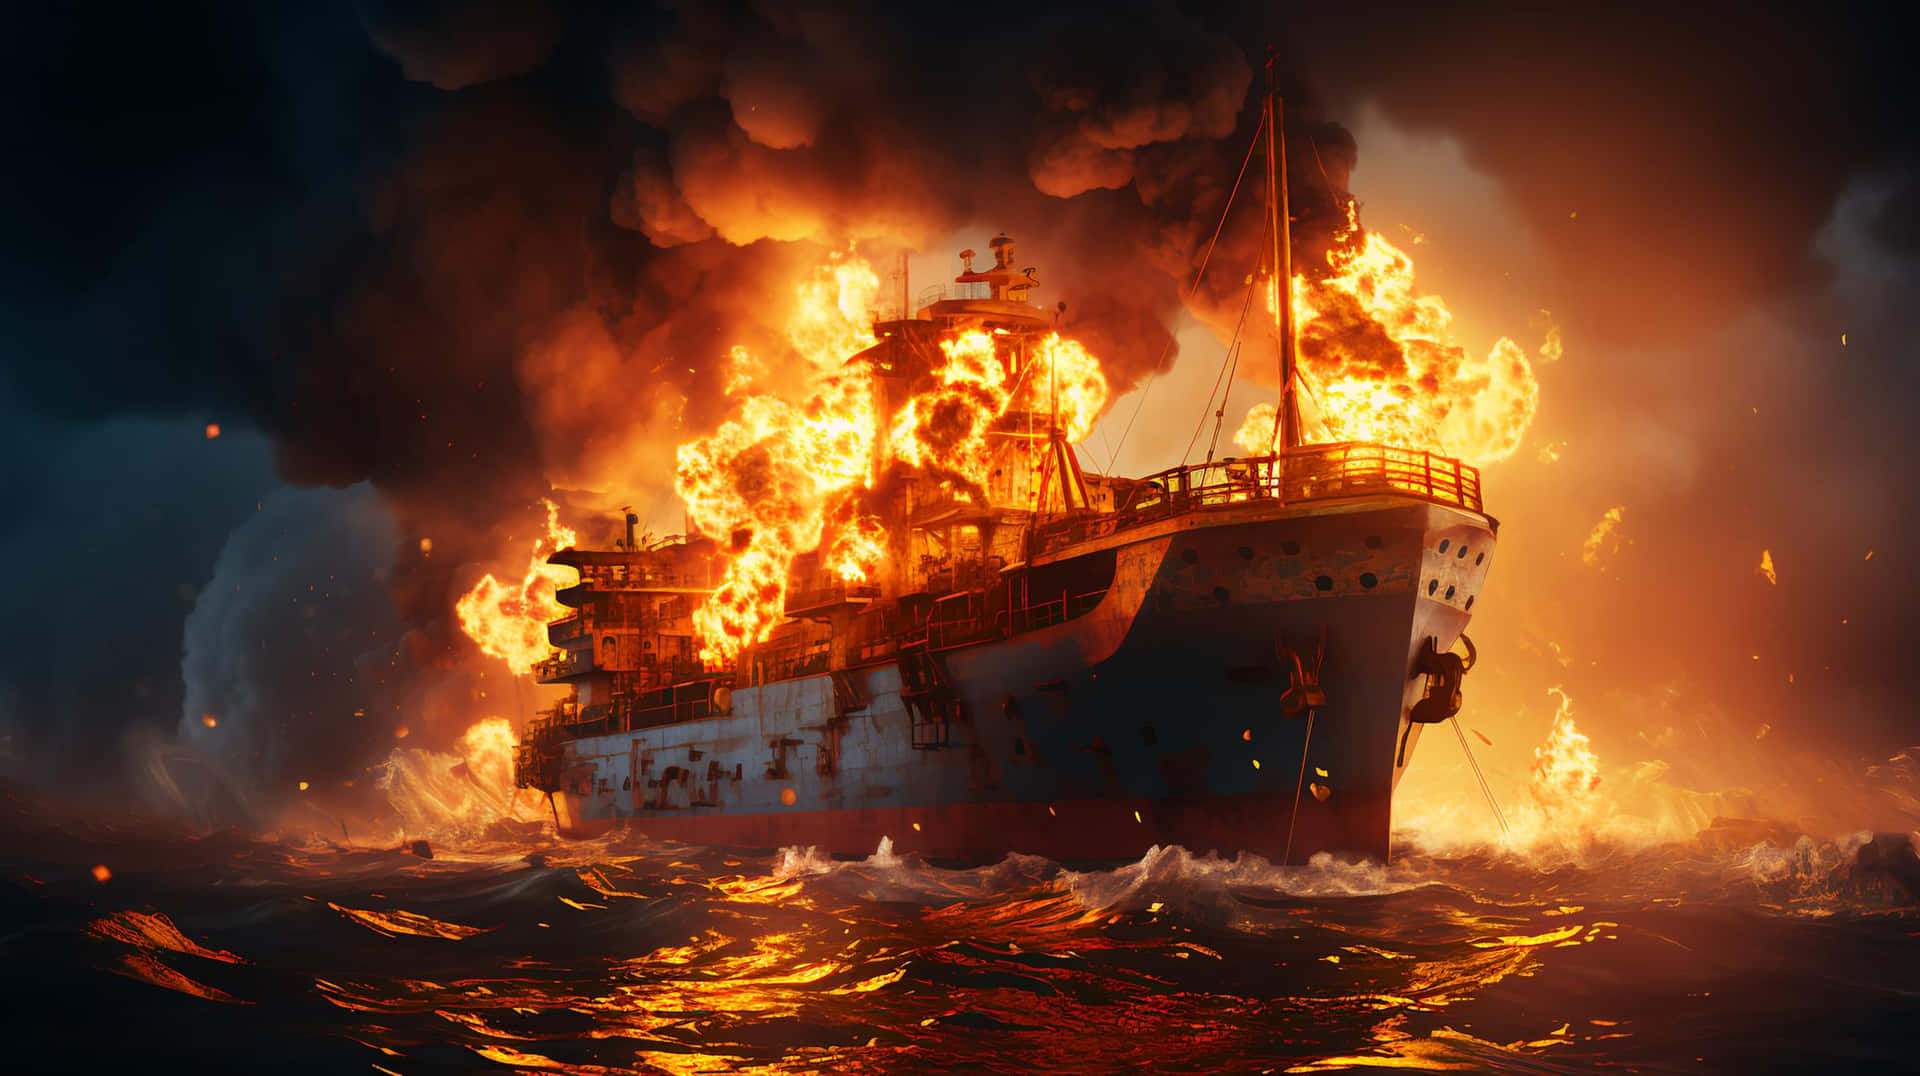 Fiery Ship At Sea Wallpaper